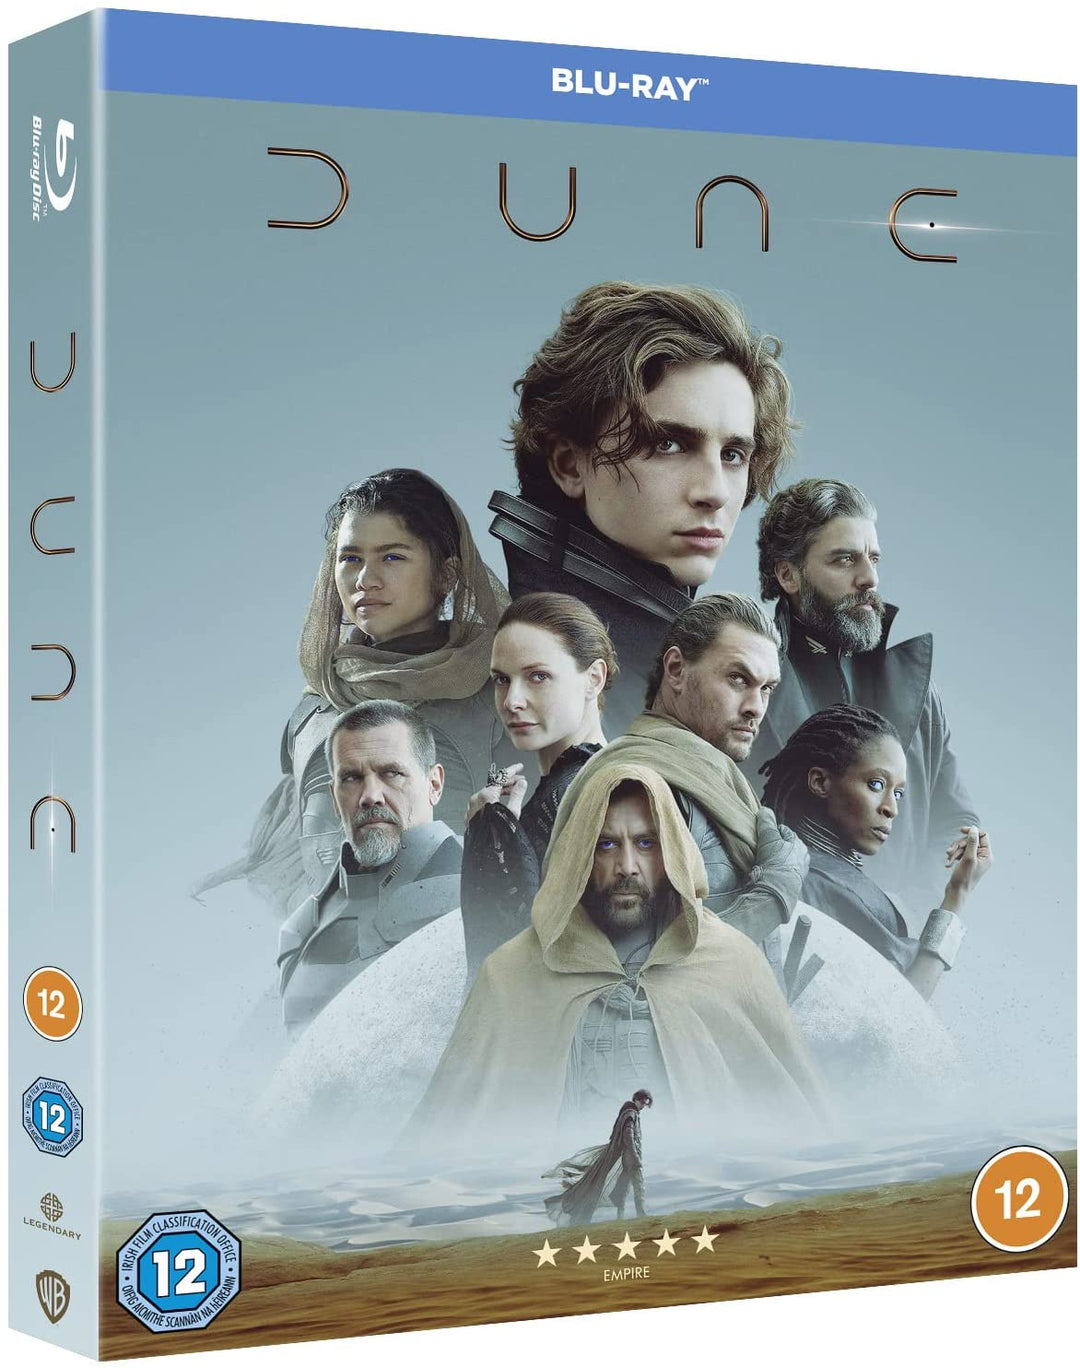 Dune [BD] [Blu-ray] [2021] [Region Free] - Sci-fi/Adventure [Blu-ray]